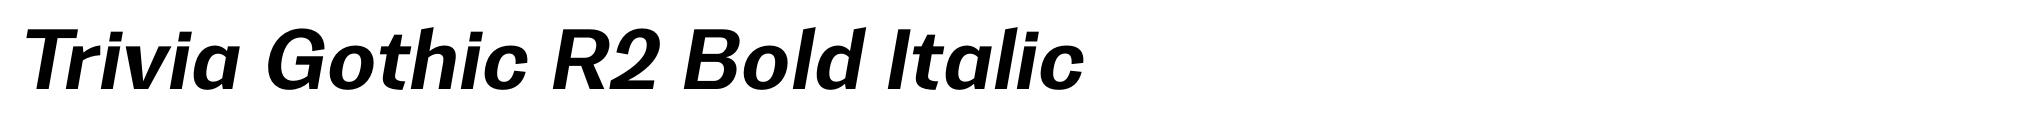 Trivia Gothic R2 Bold Italic image